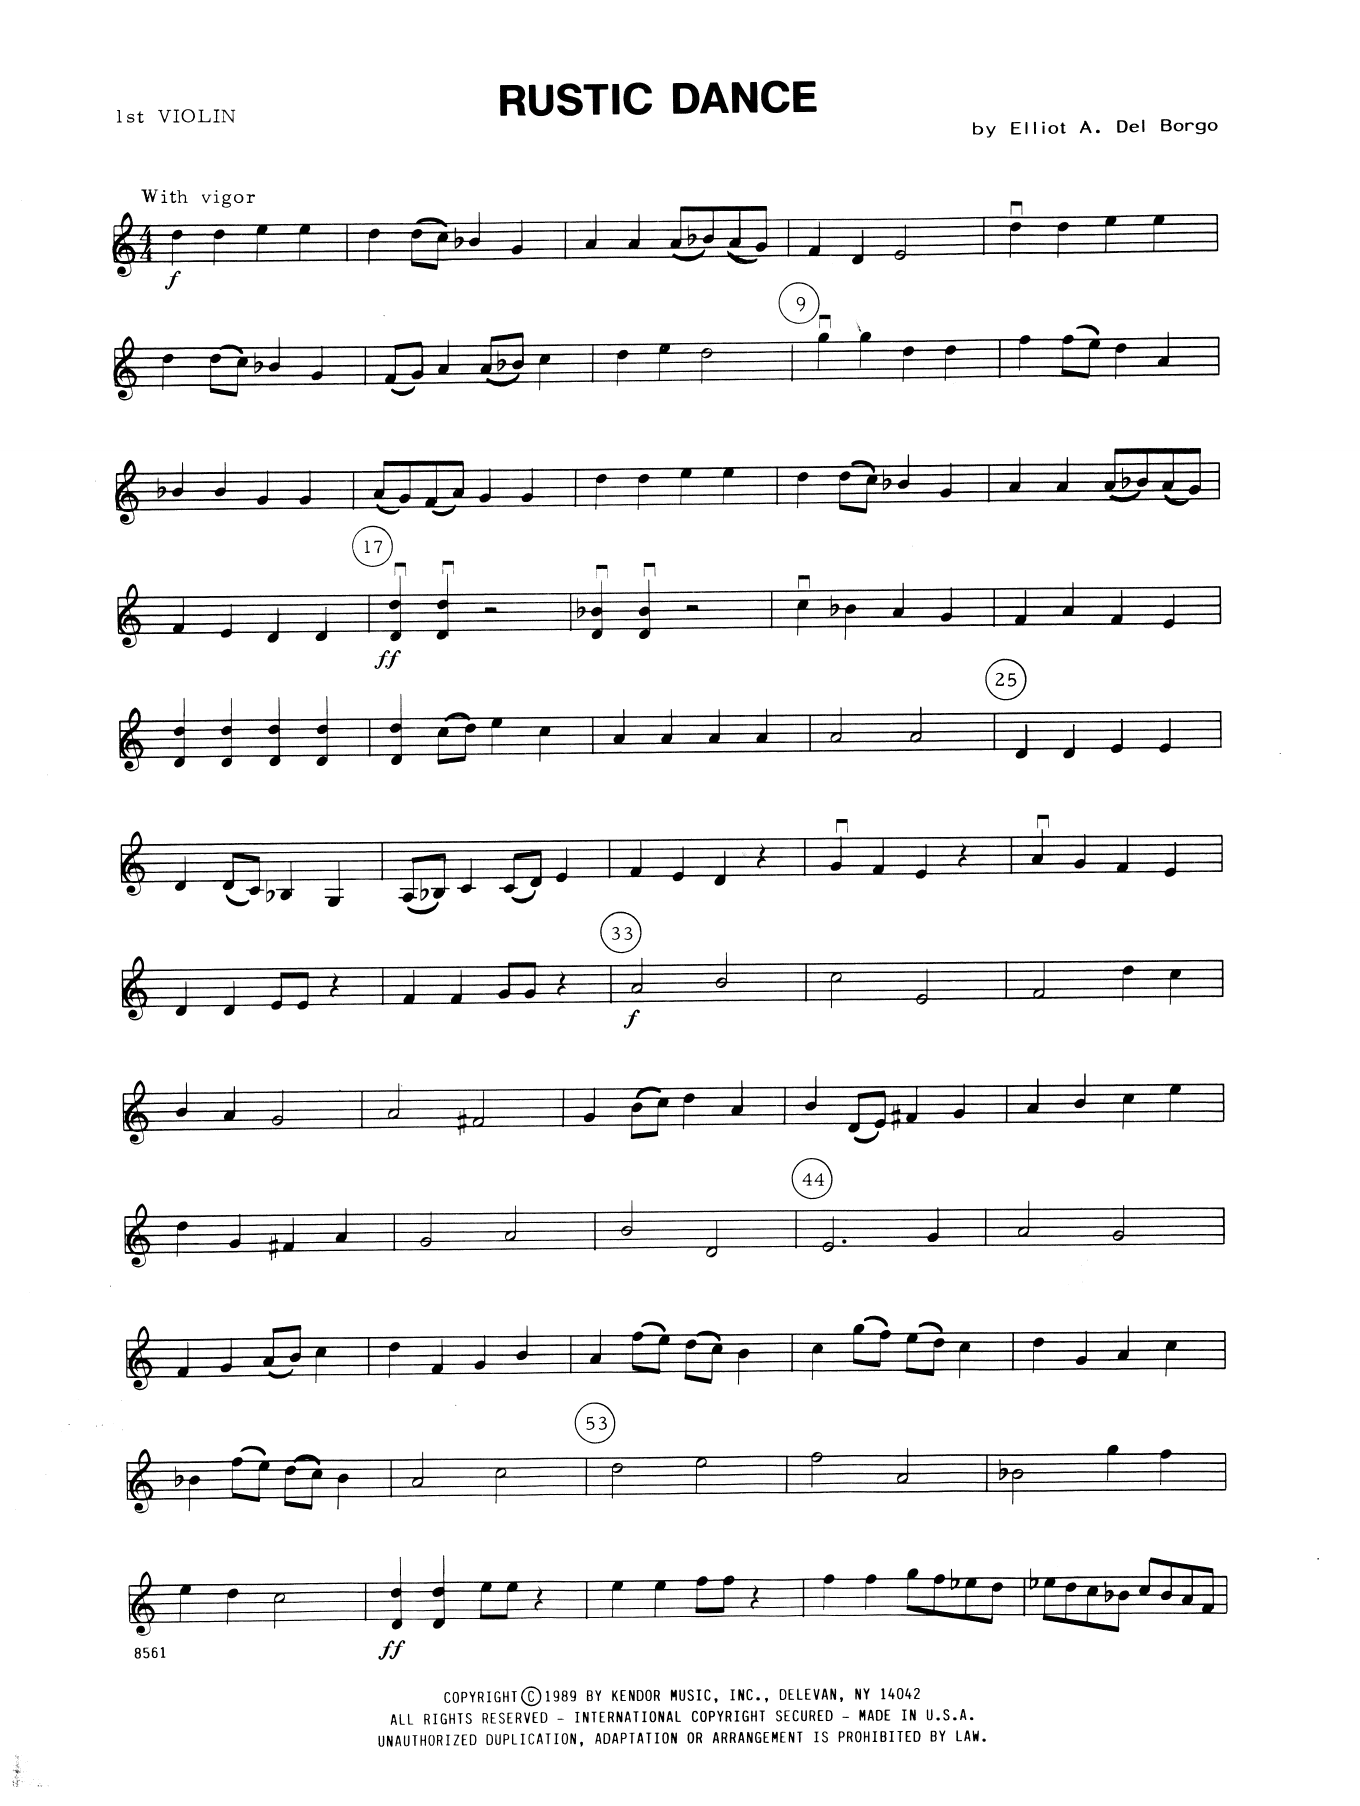 Download Elliot A. Del Borgo Rustic Dance - 1st Violin Sheet Music